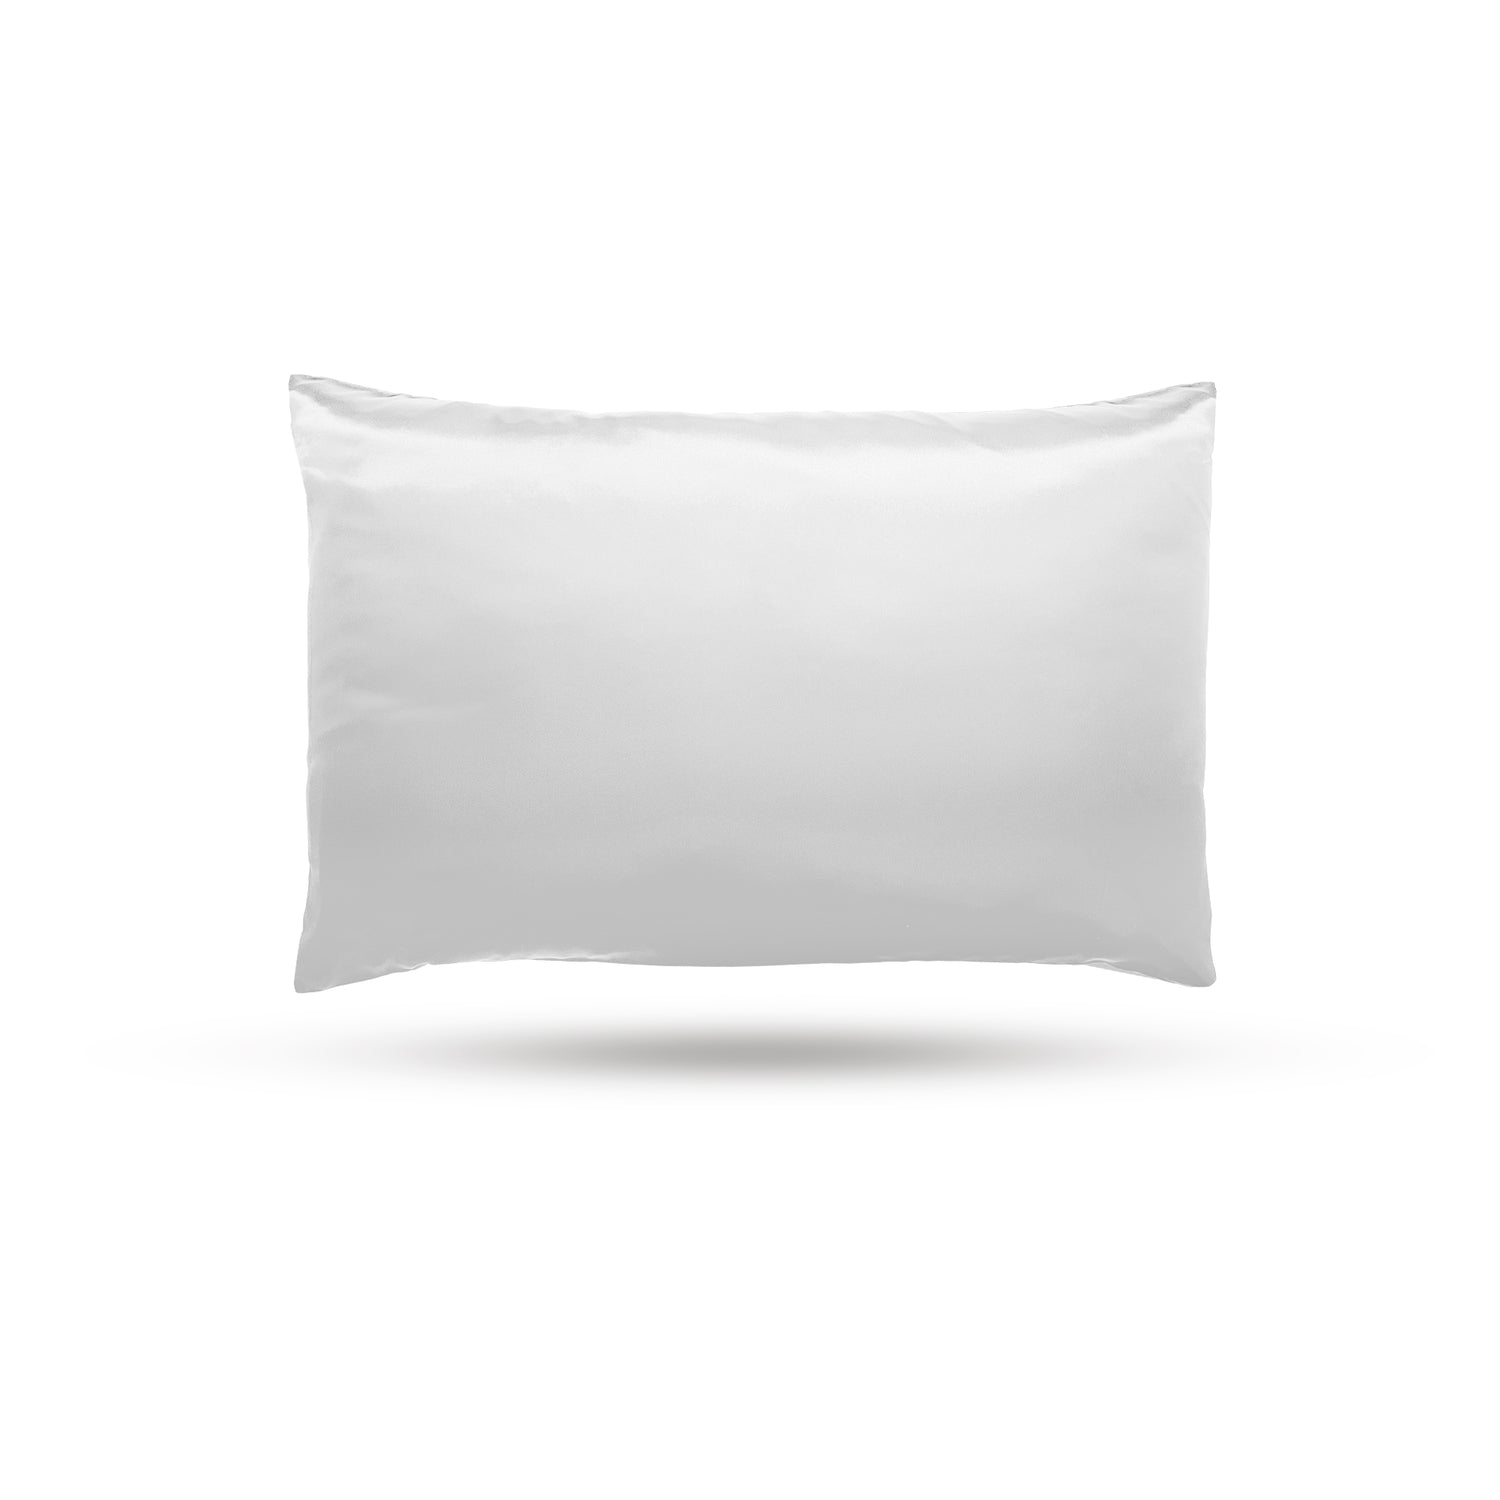 White satin pillowcase for curly kinky wavy coily hair